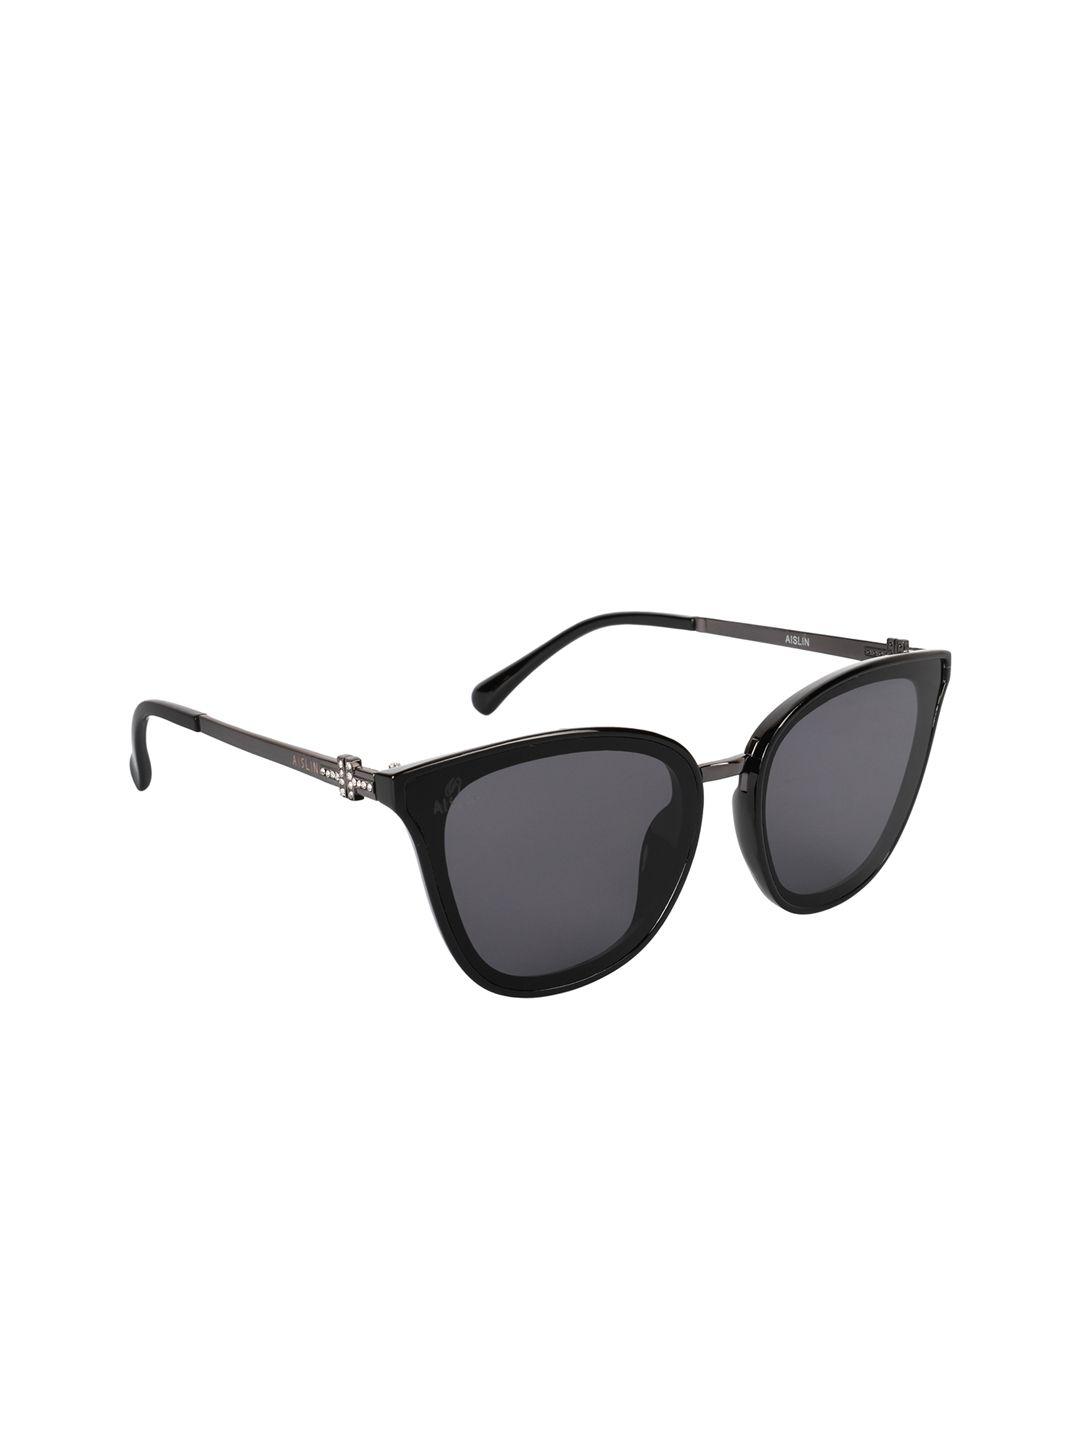 aislin women black & gunmetal cateye sunglasses es_14469-82-as-2003-blk-bkgn-ce-60-g